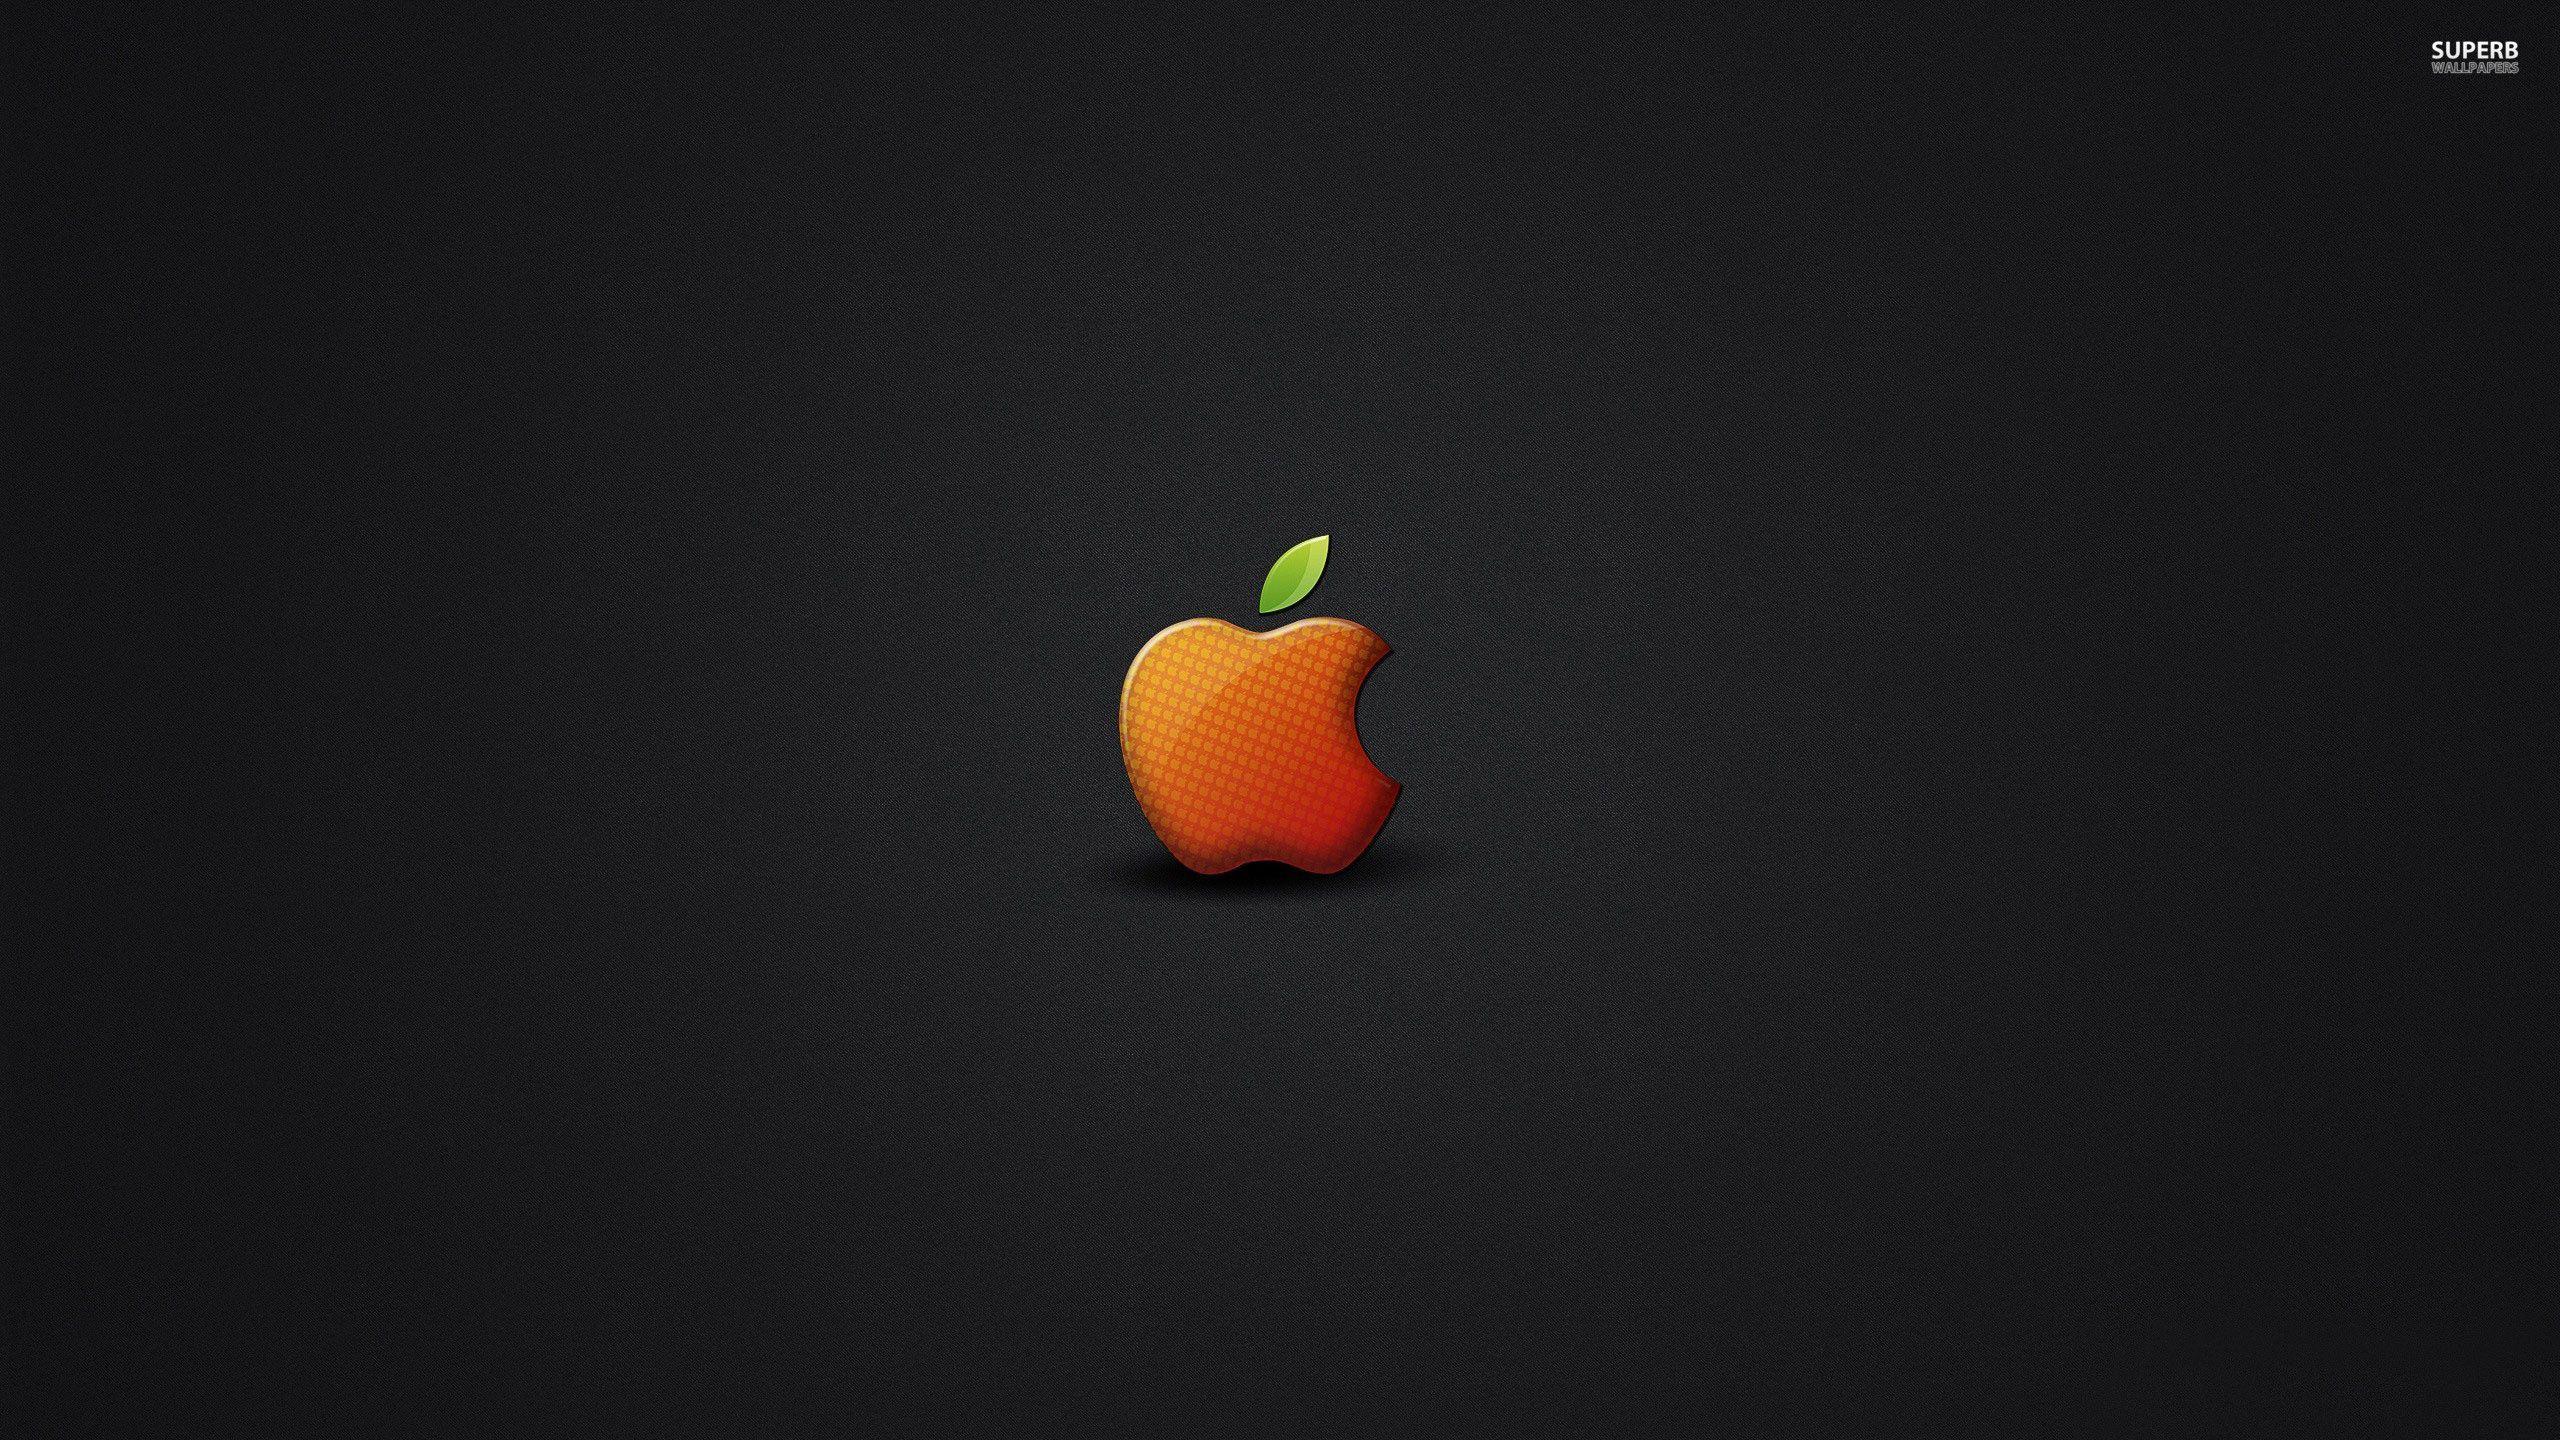 Orange Apple logo wallpaper wallpaper - #